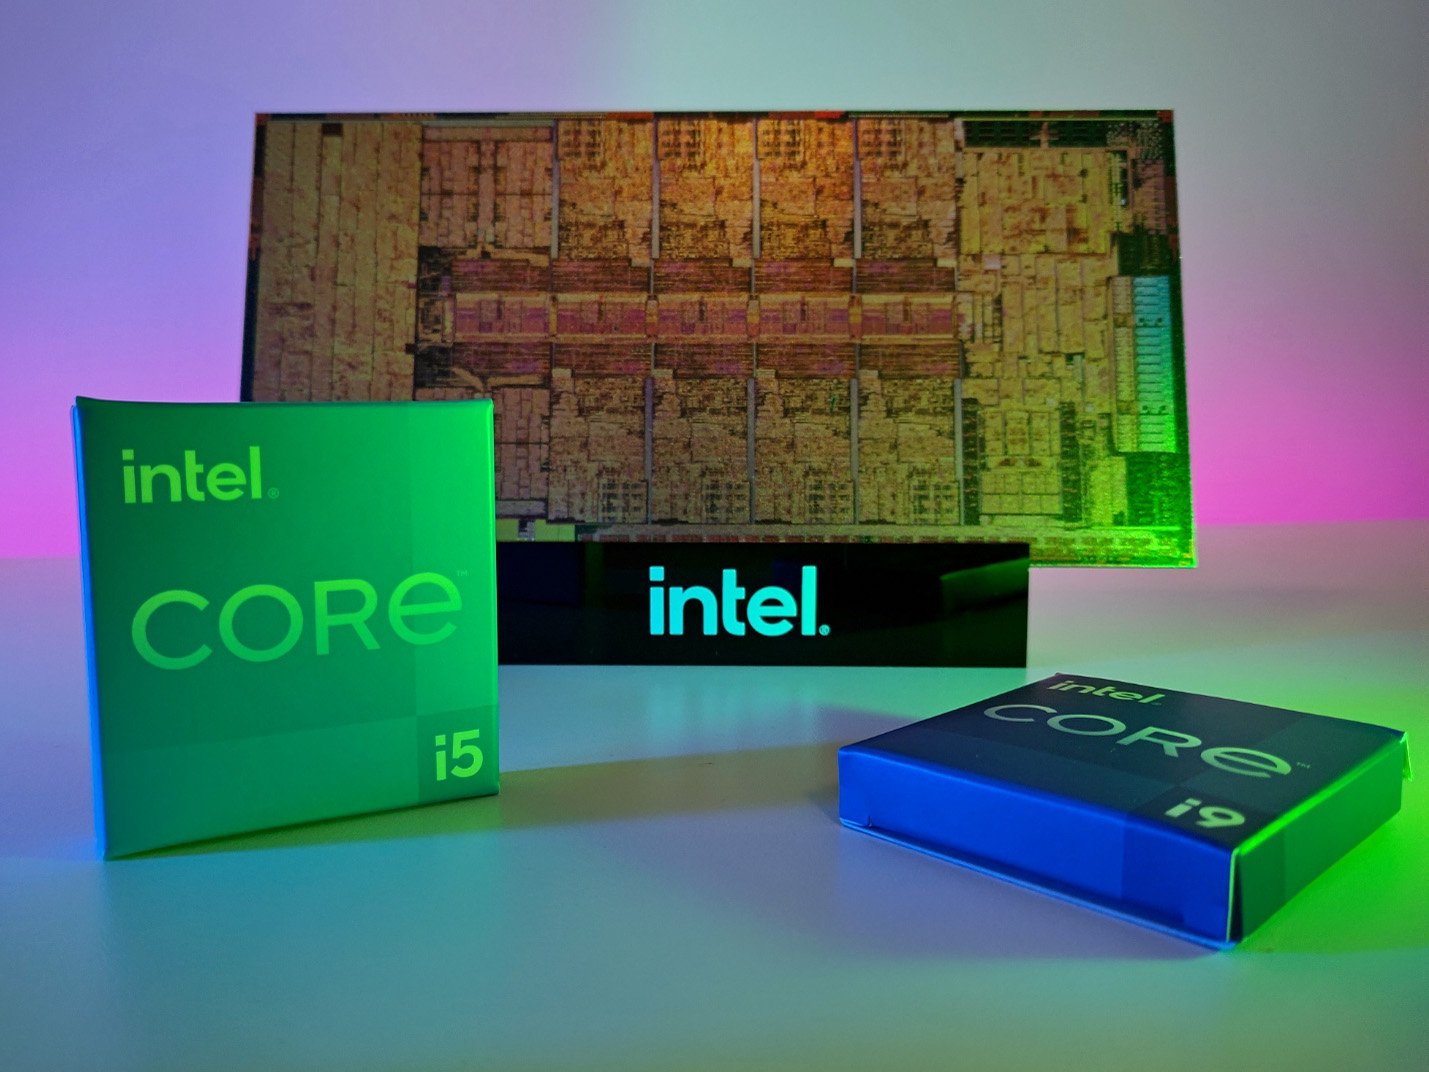 Intel 12th Gen Core I9 Hero Boxes